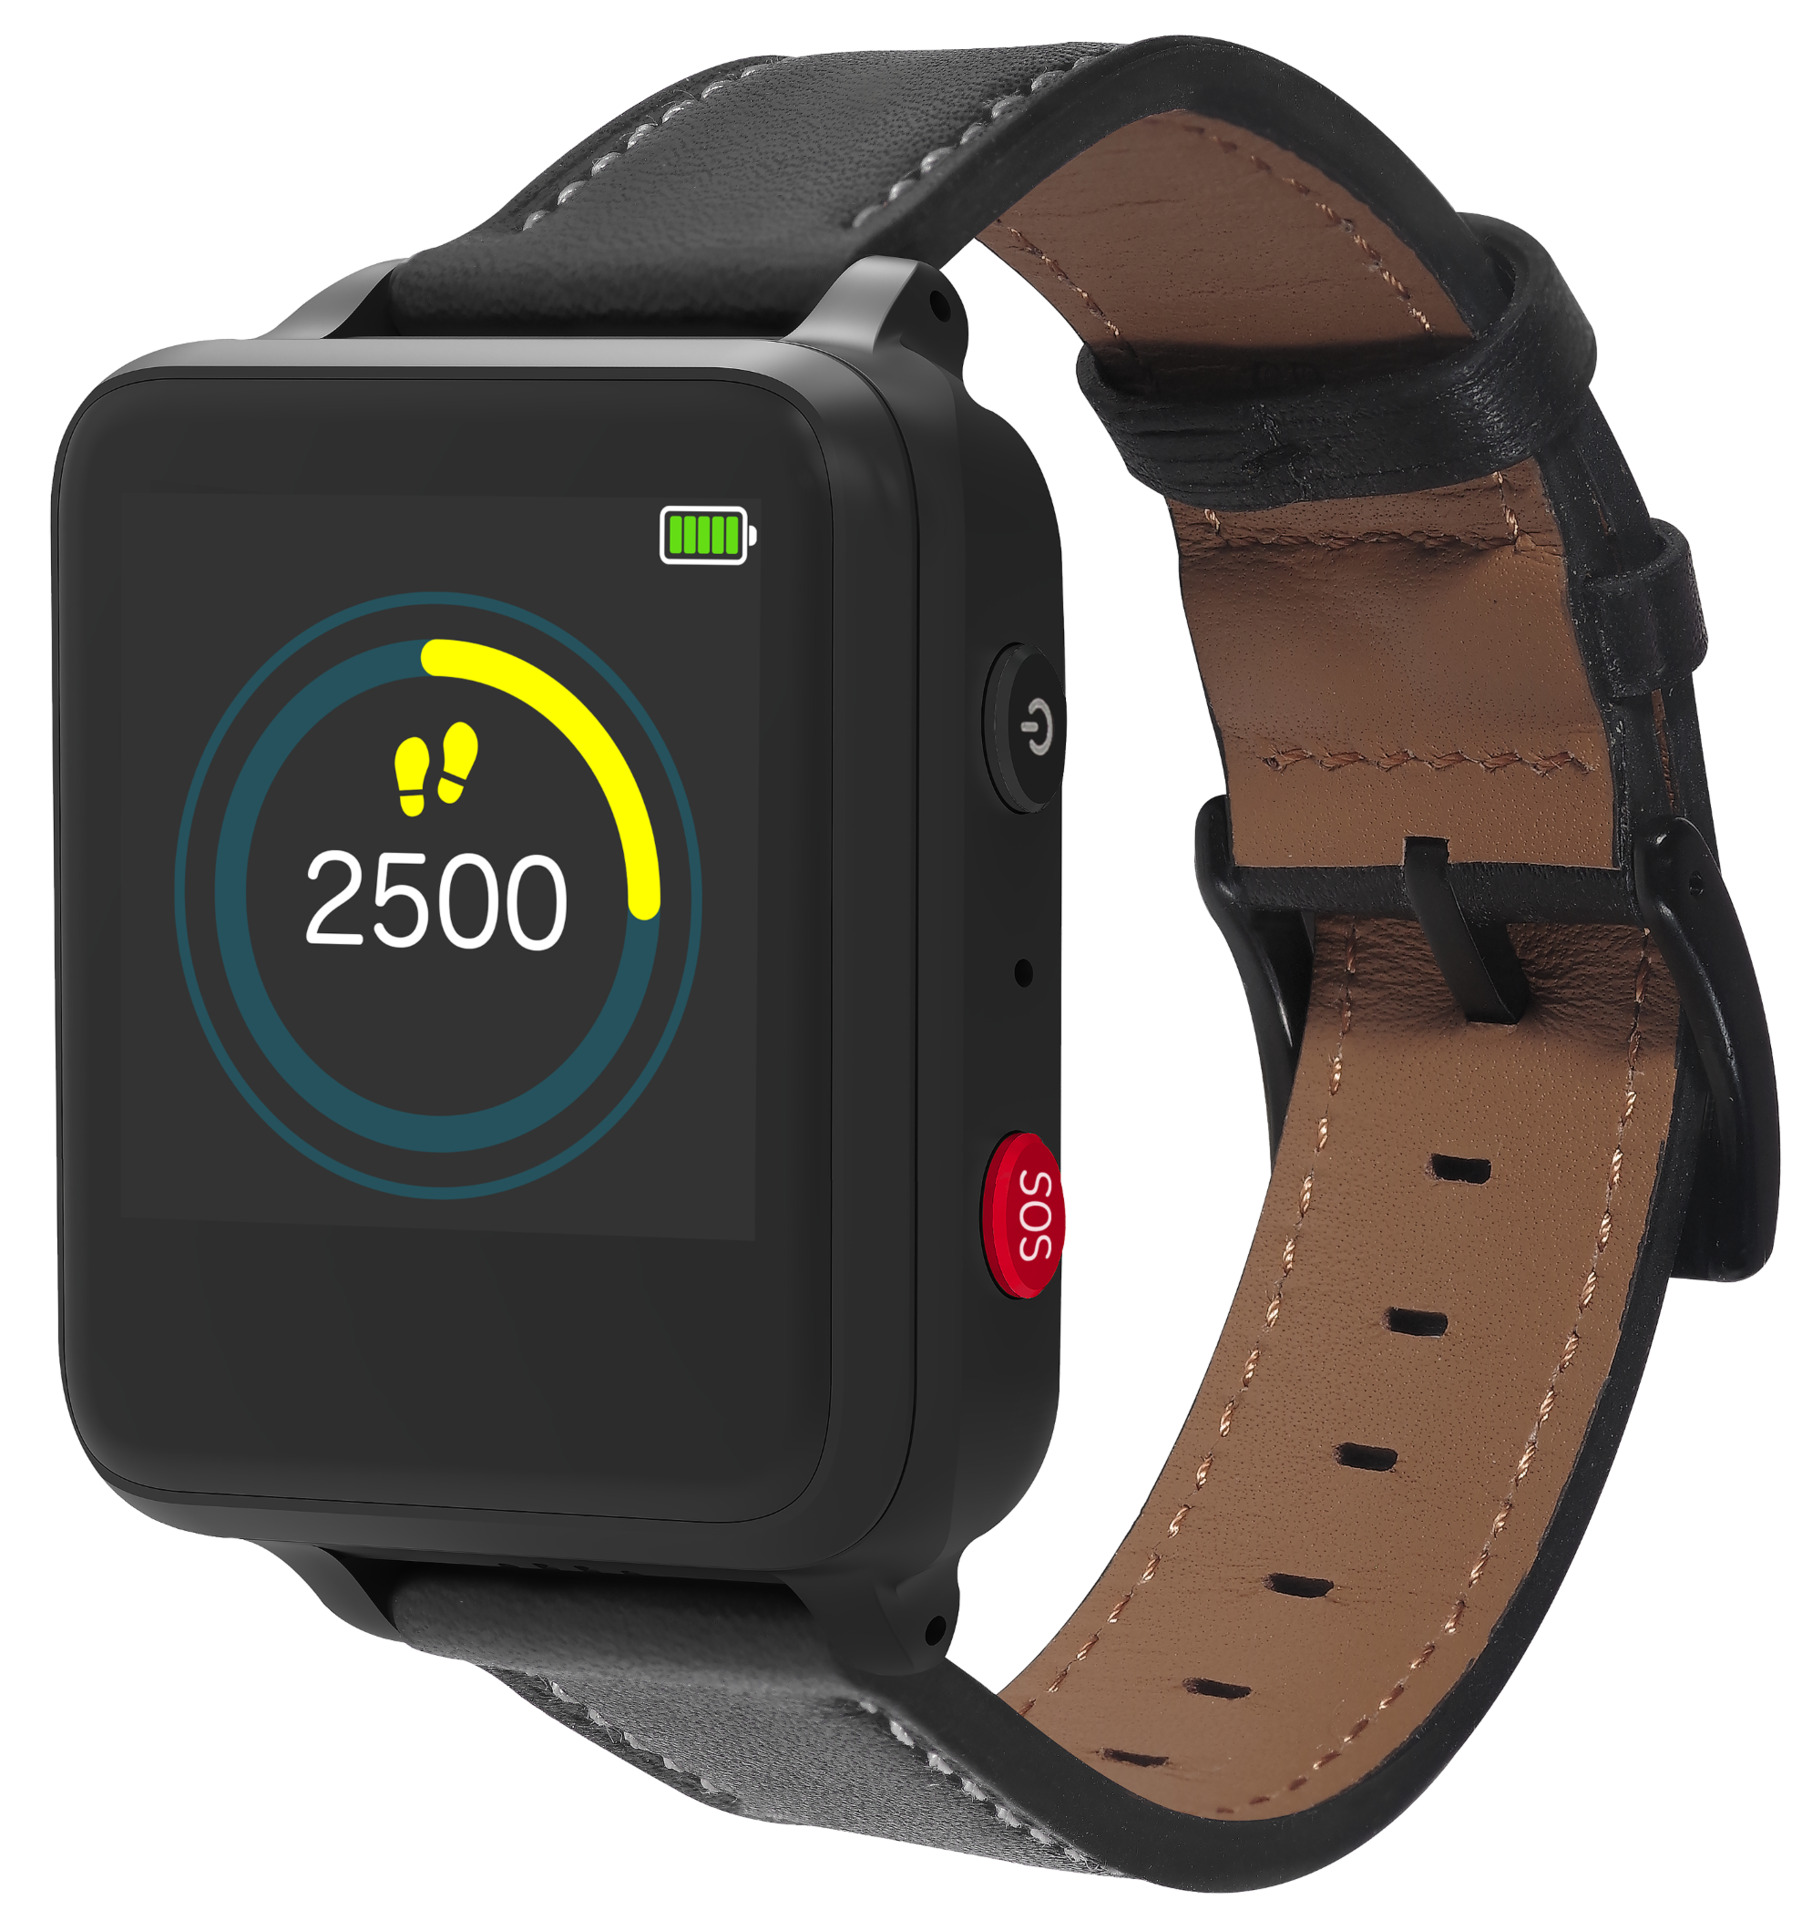 ANIO Care + schwarz Leder, Smartwatch